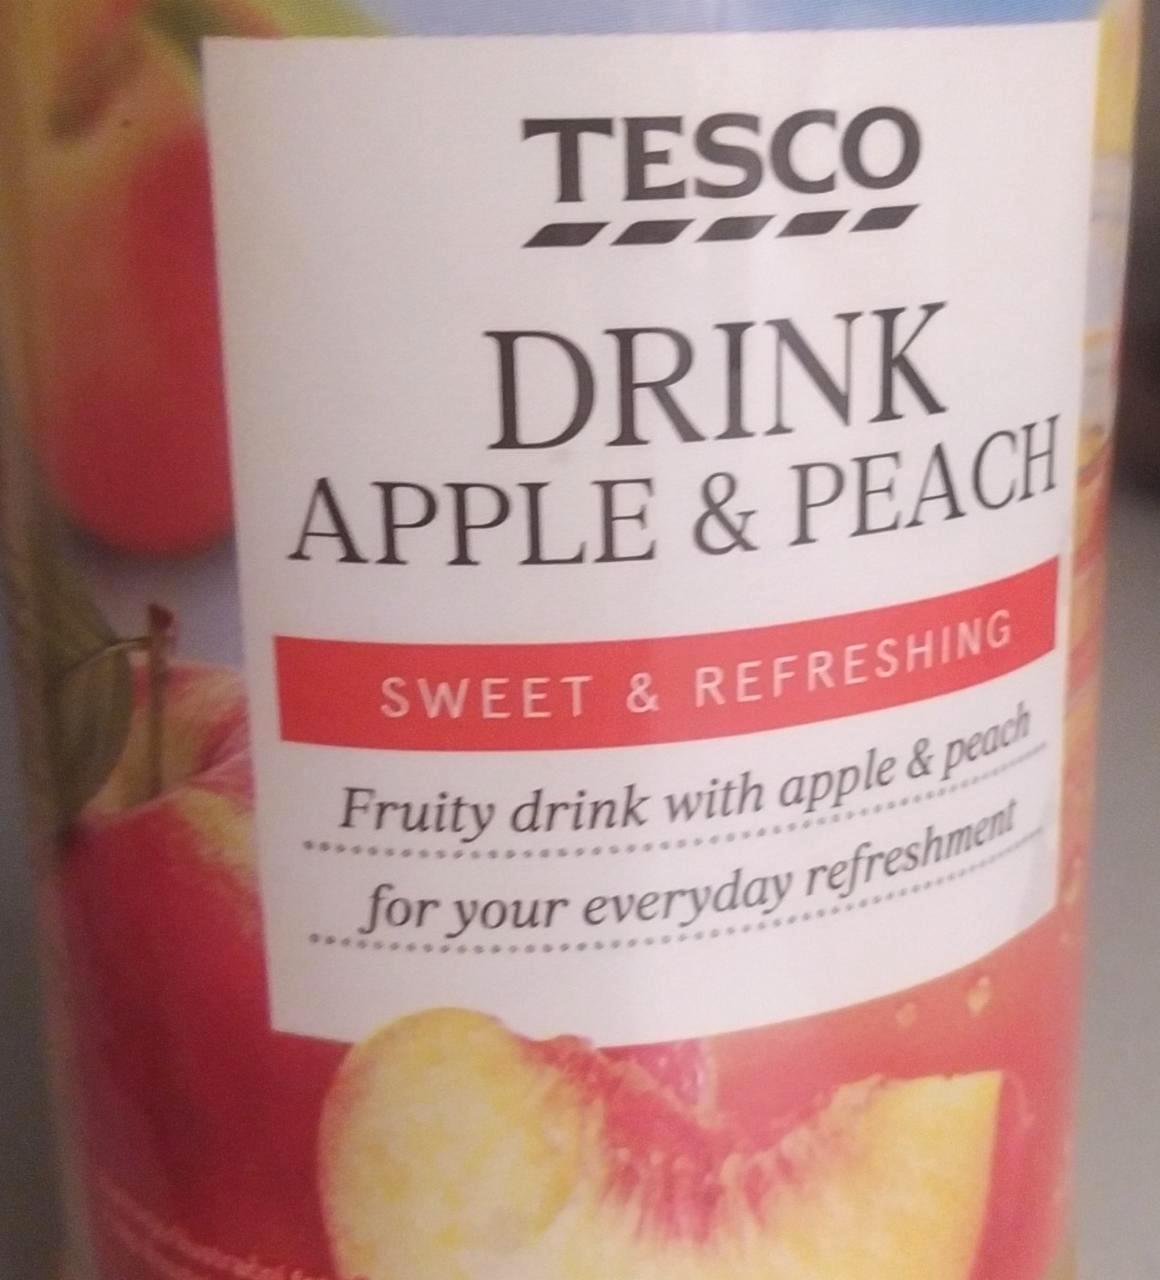 Képek - Apple & peach drink Tesco